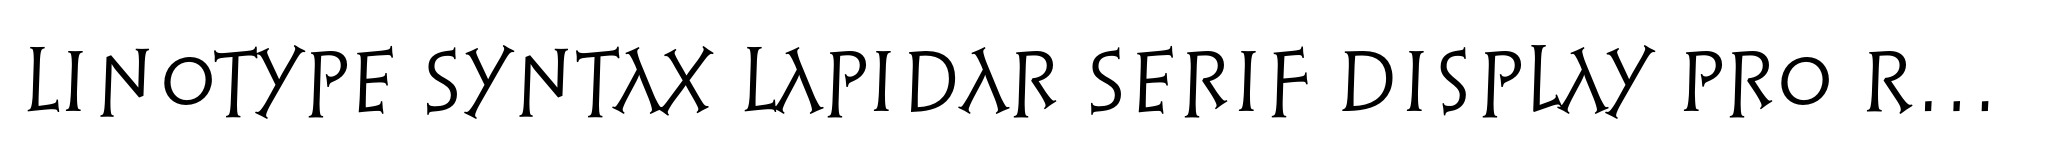 Linotype Syntax Lapidar Serif Display Pro Regular image